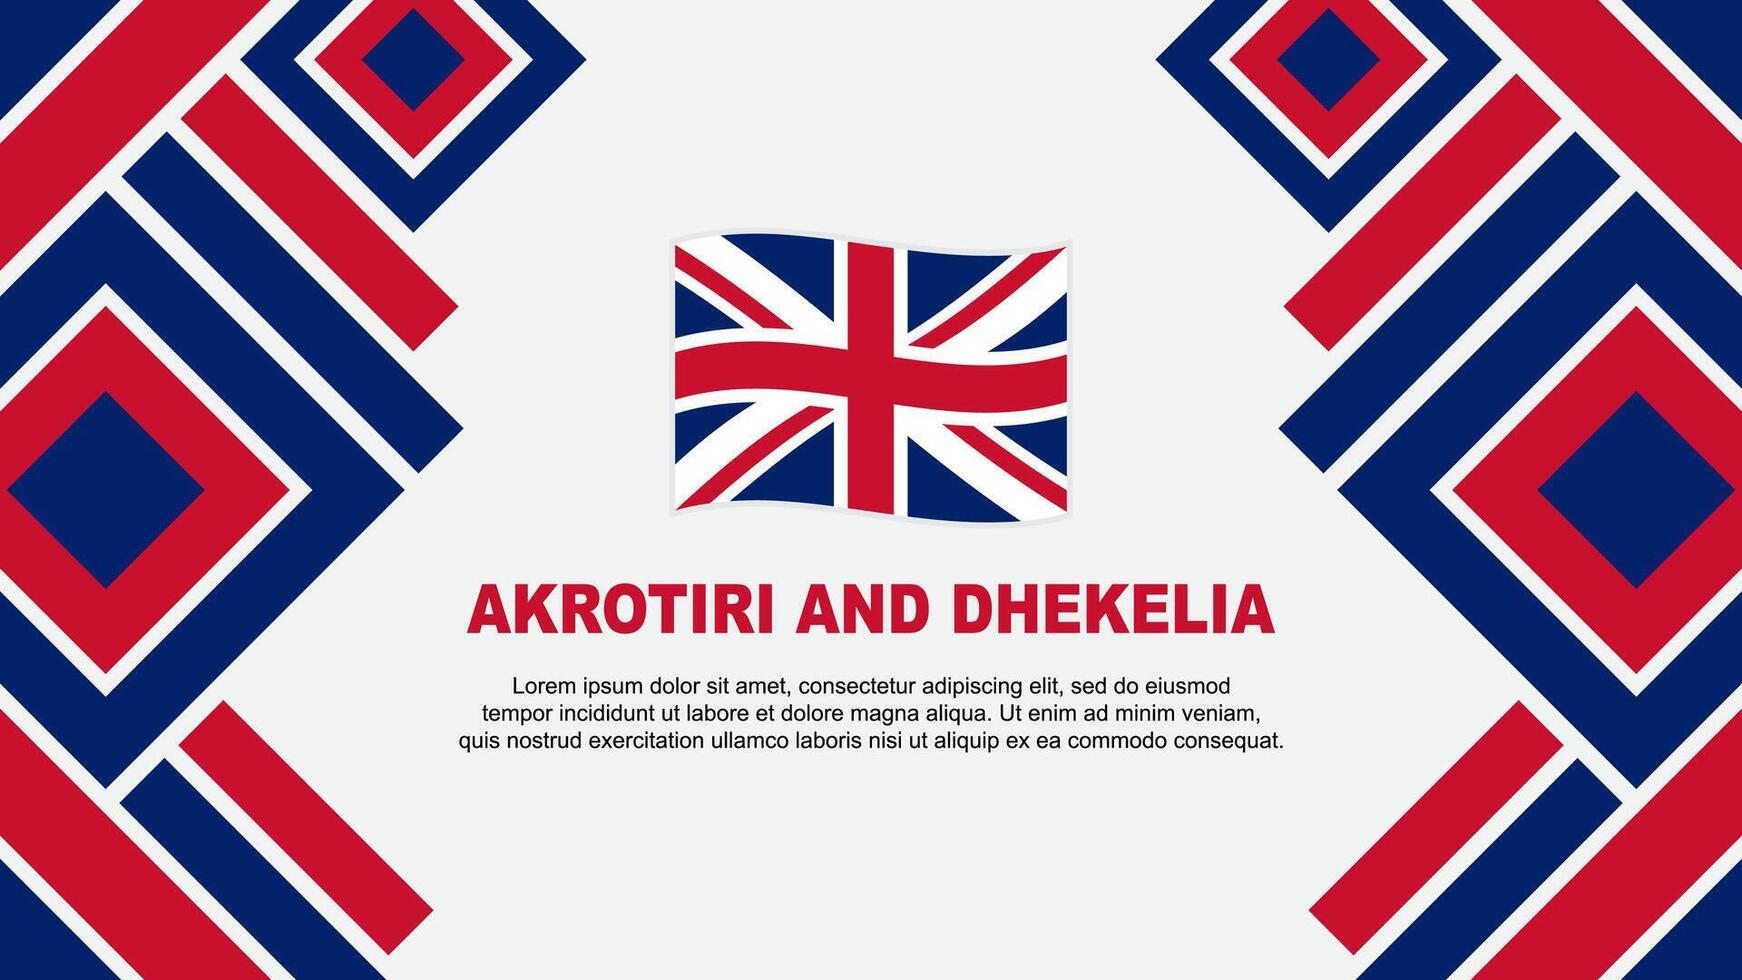 Akrotiri und dhekelia Flagge abstrakt Hintergrund Design Vorlage. Akrotiri und dhekelia Unabhängigkeit Tag Banner Hintergrund Vektor Illustration